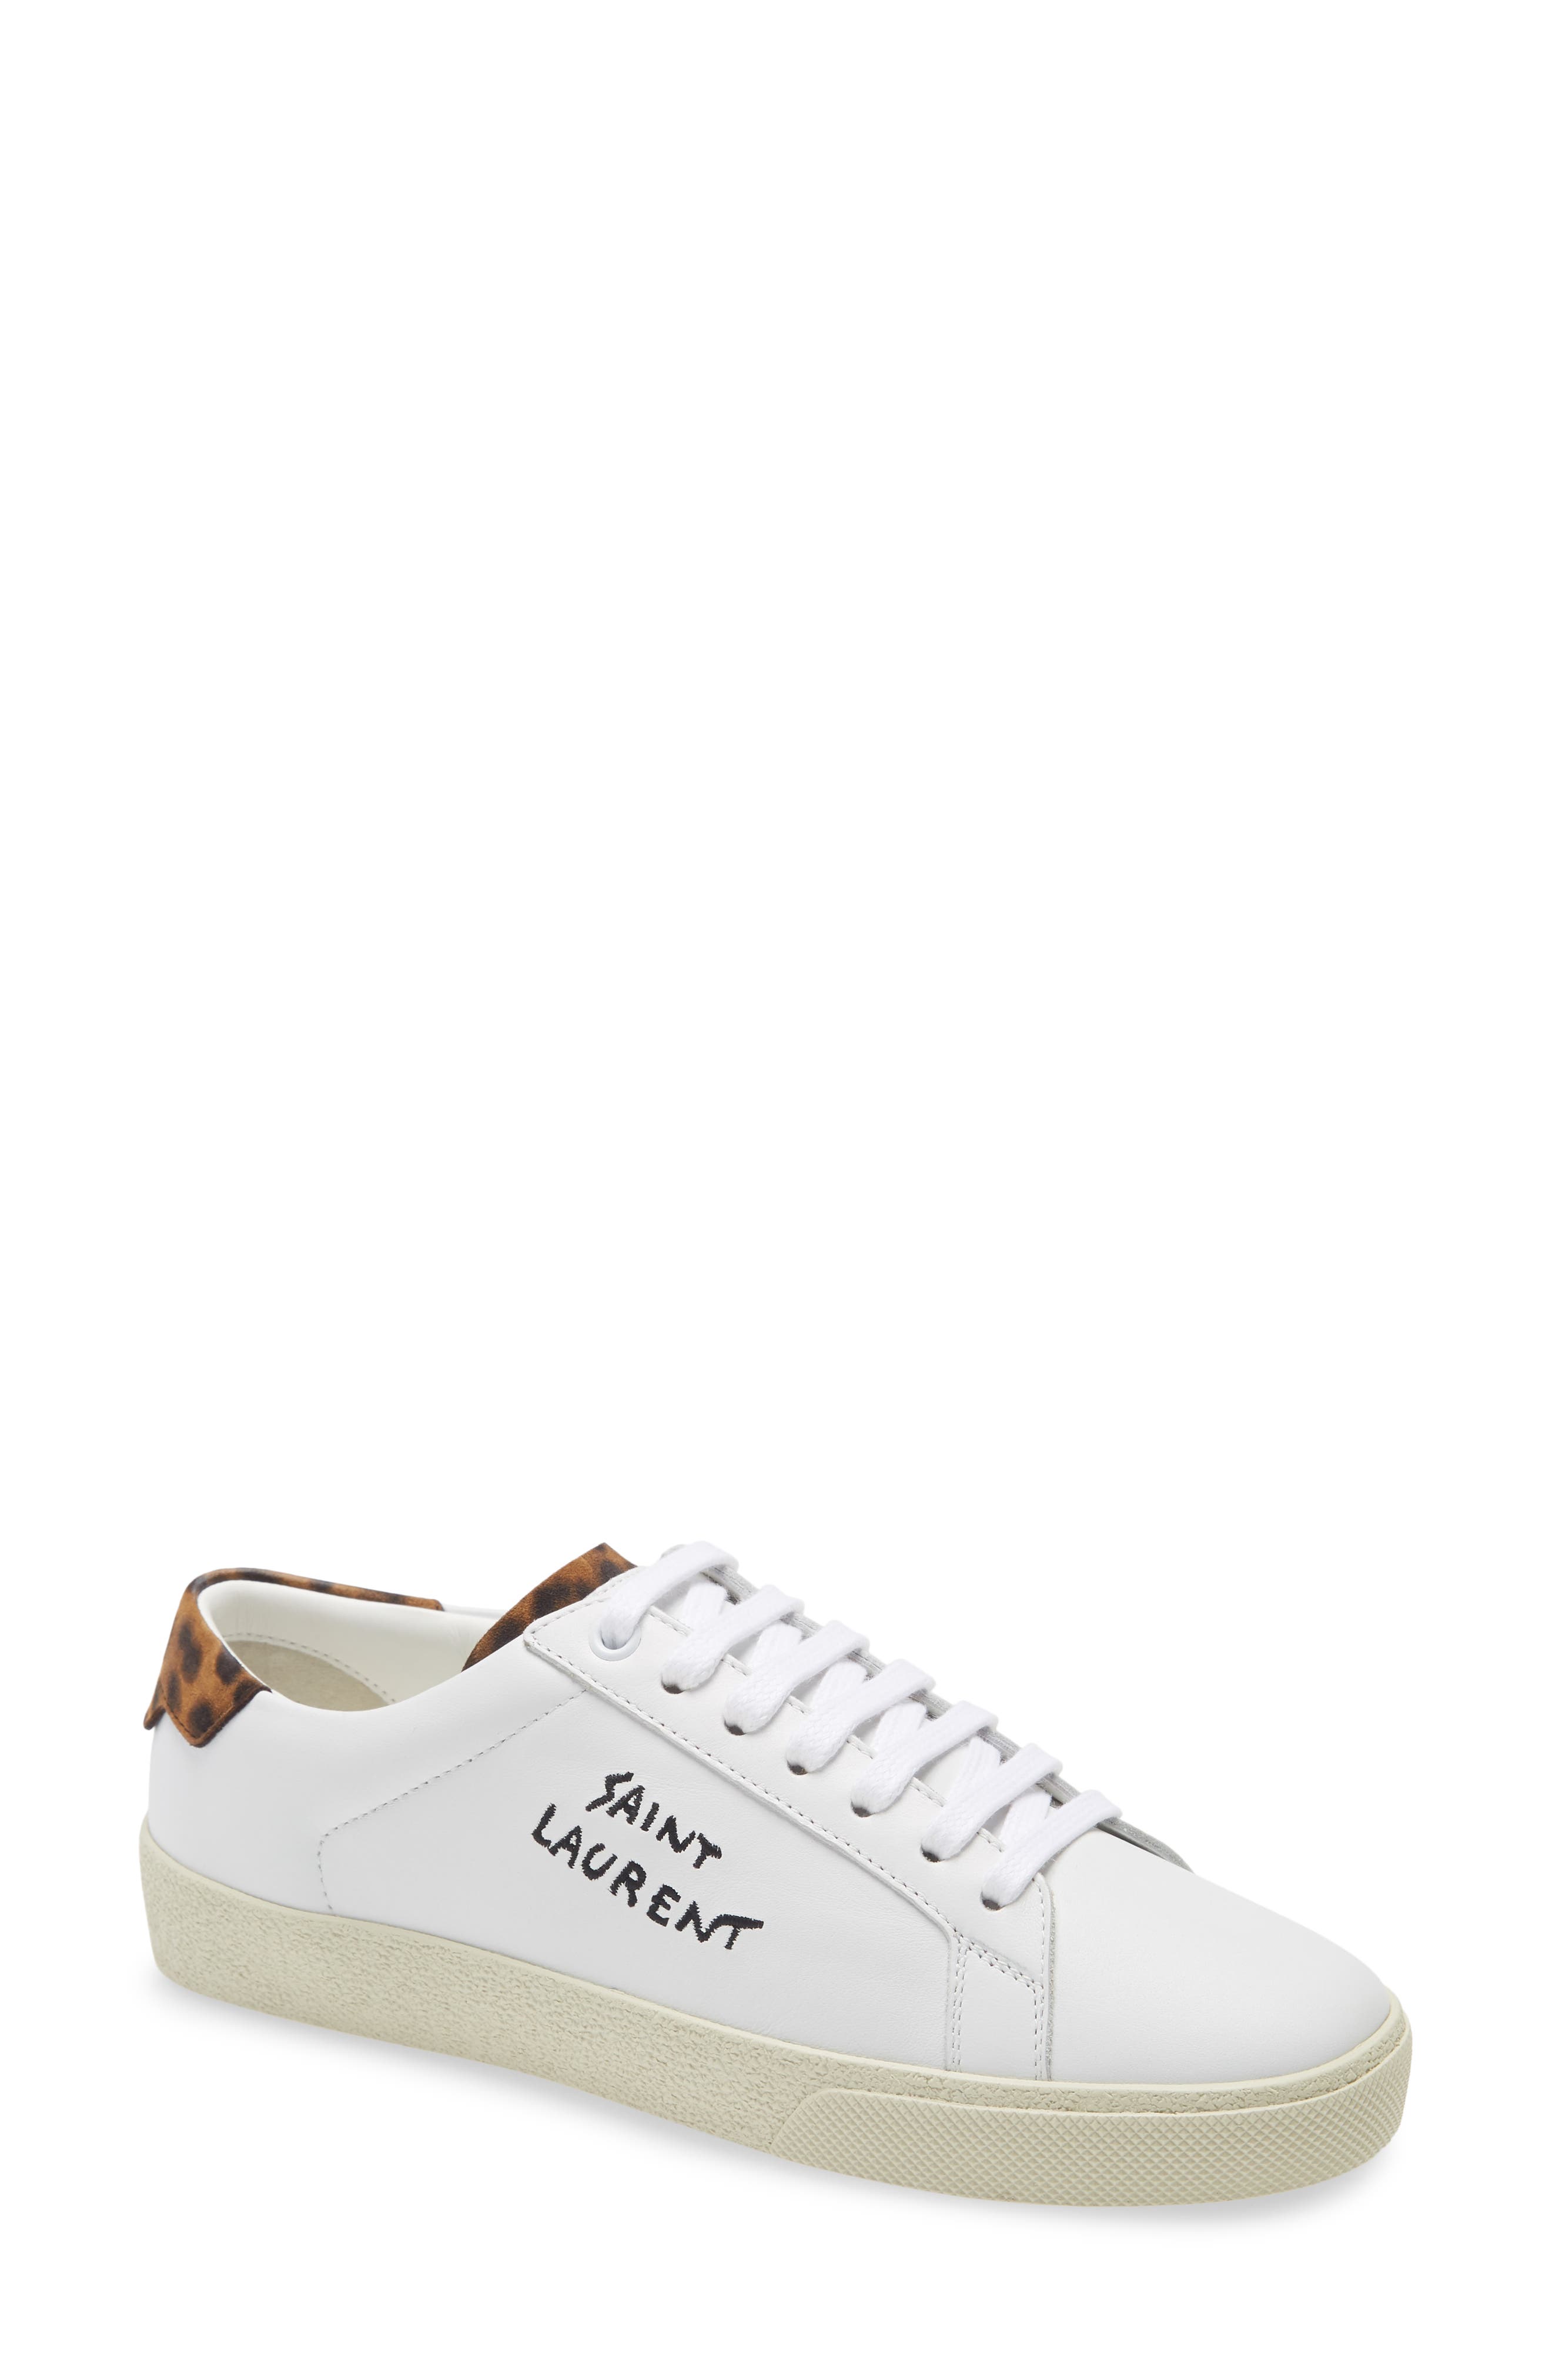 ysl sneakers white